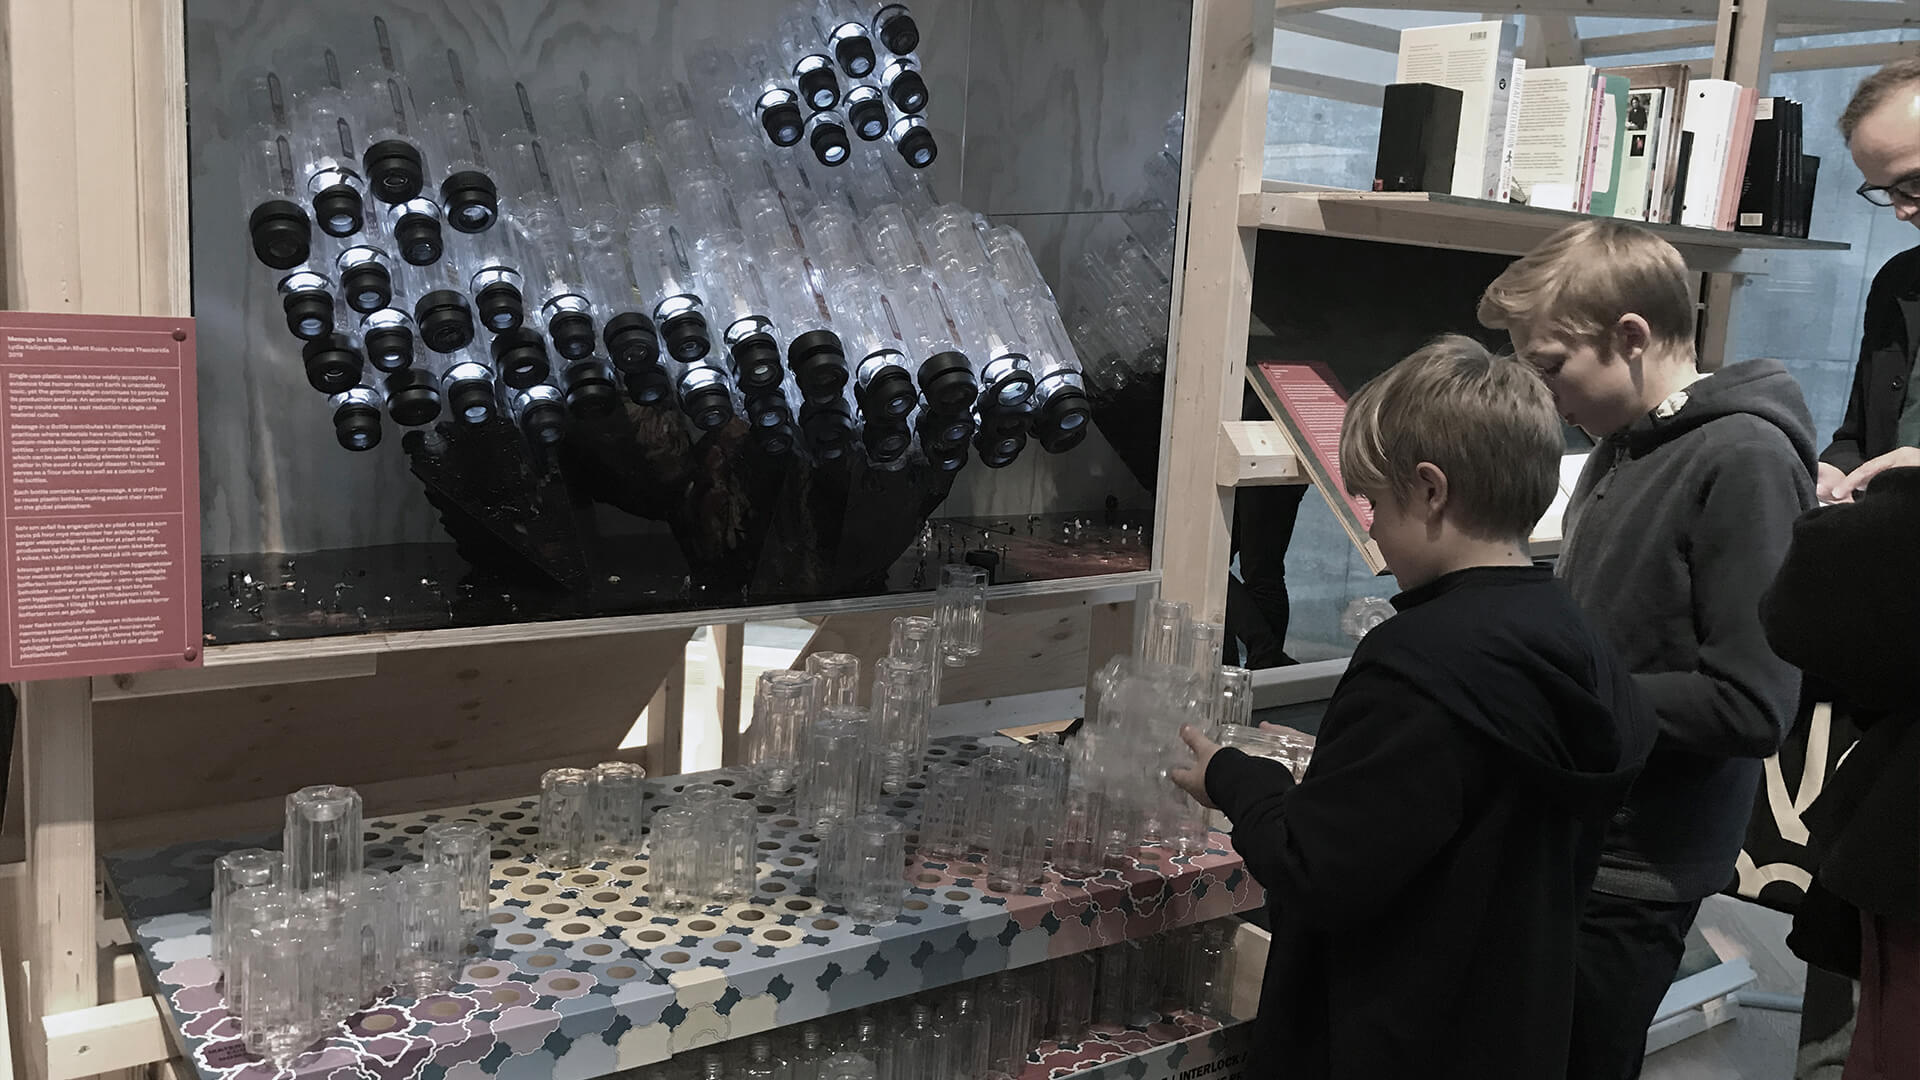 Bottle-Building The Future